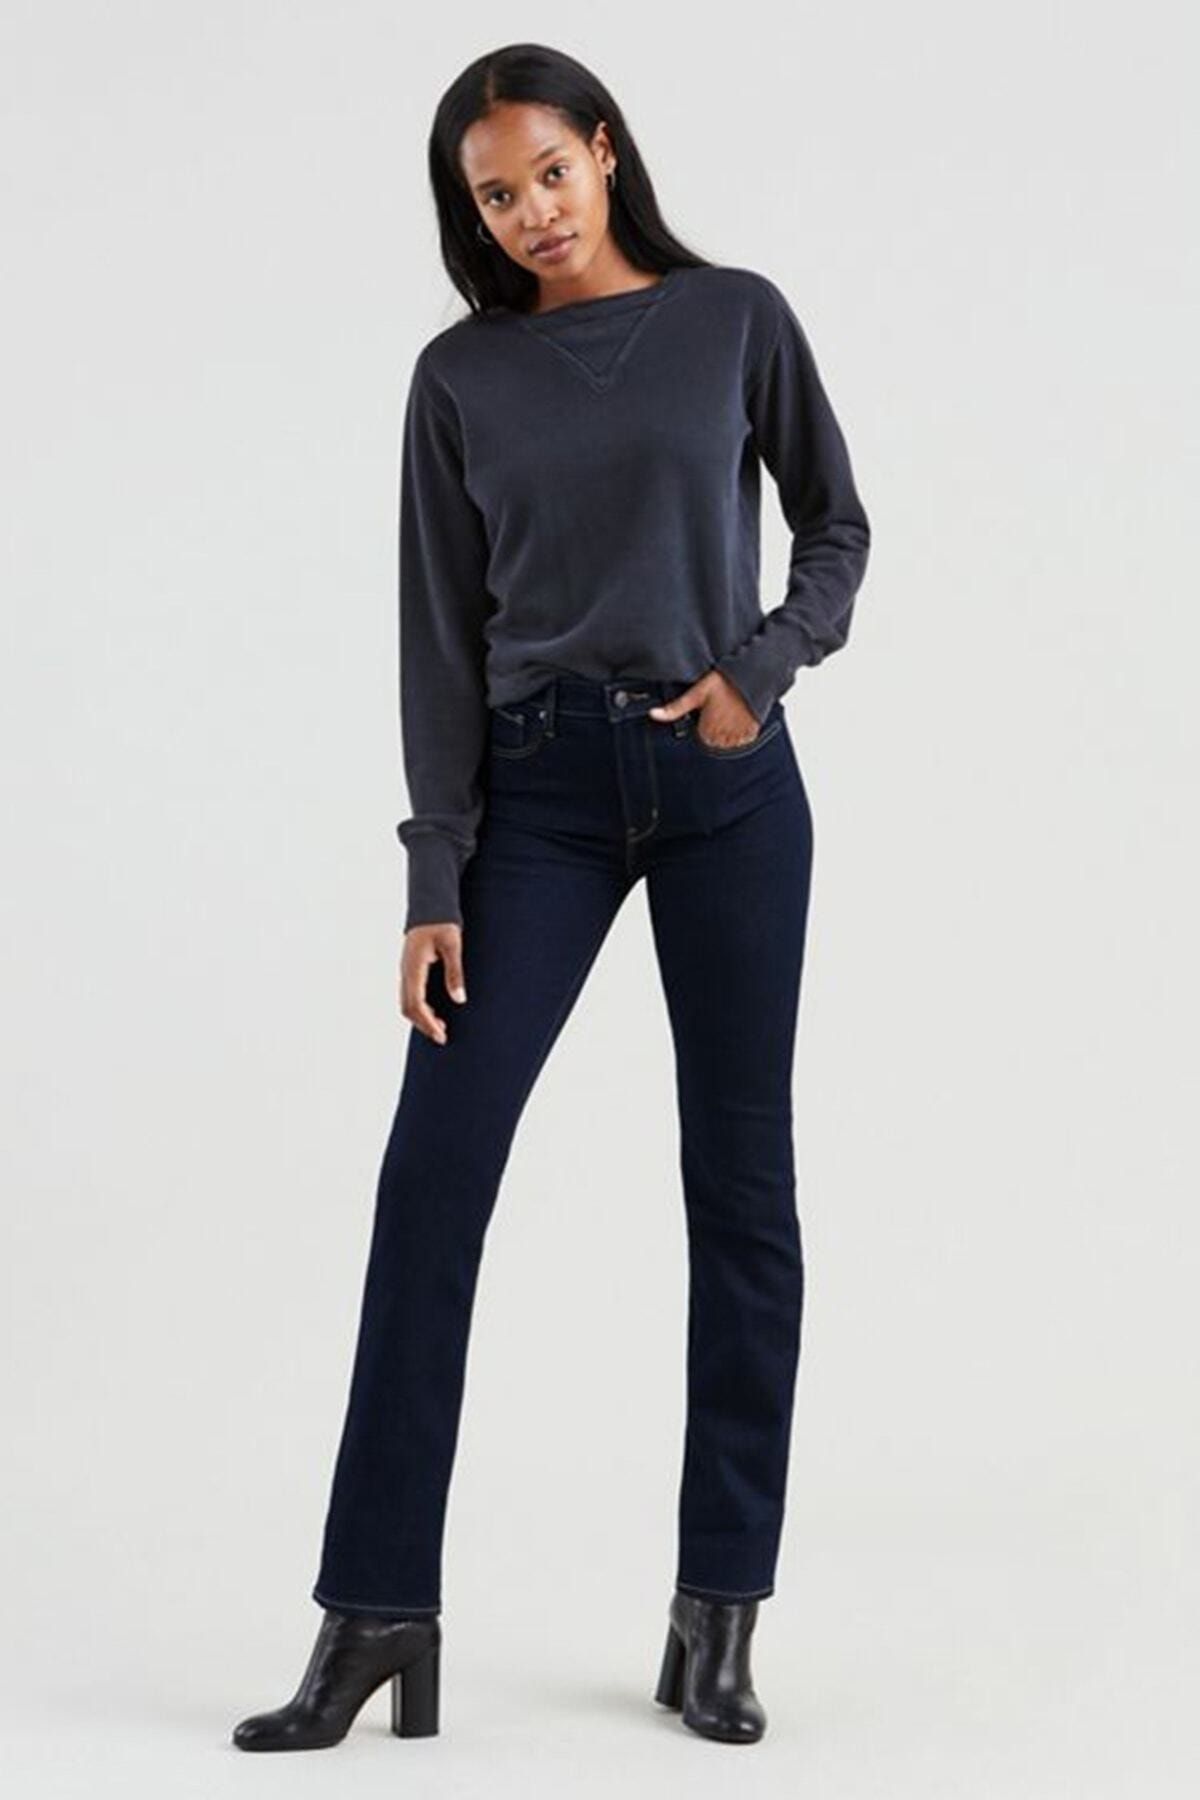 Levi's Kadın Lacivert Yüksek Bel Boru Paça 724 Jeans 188830015